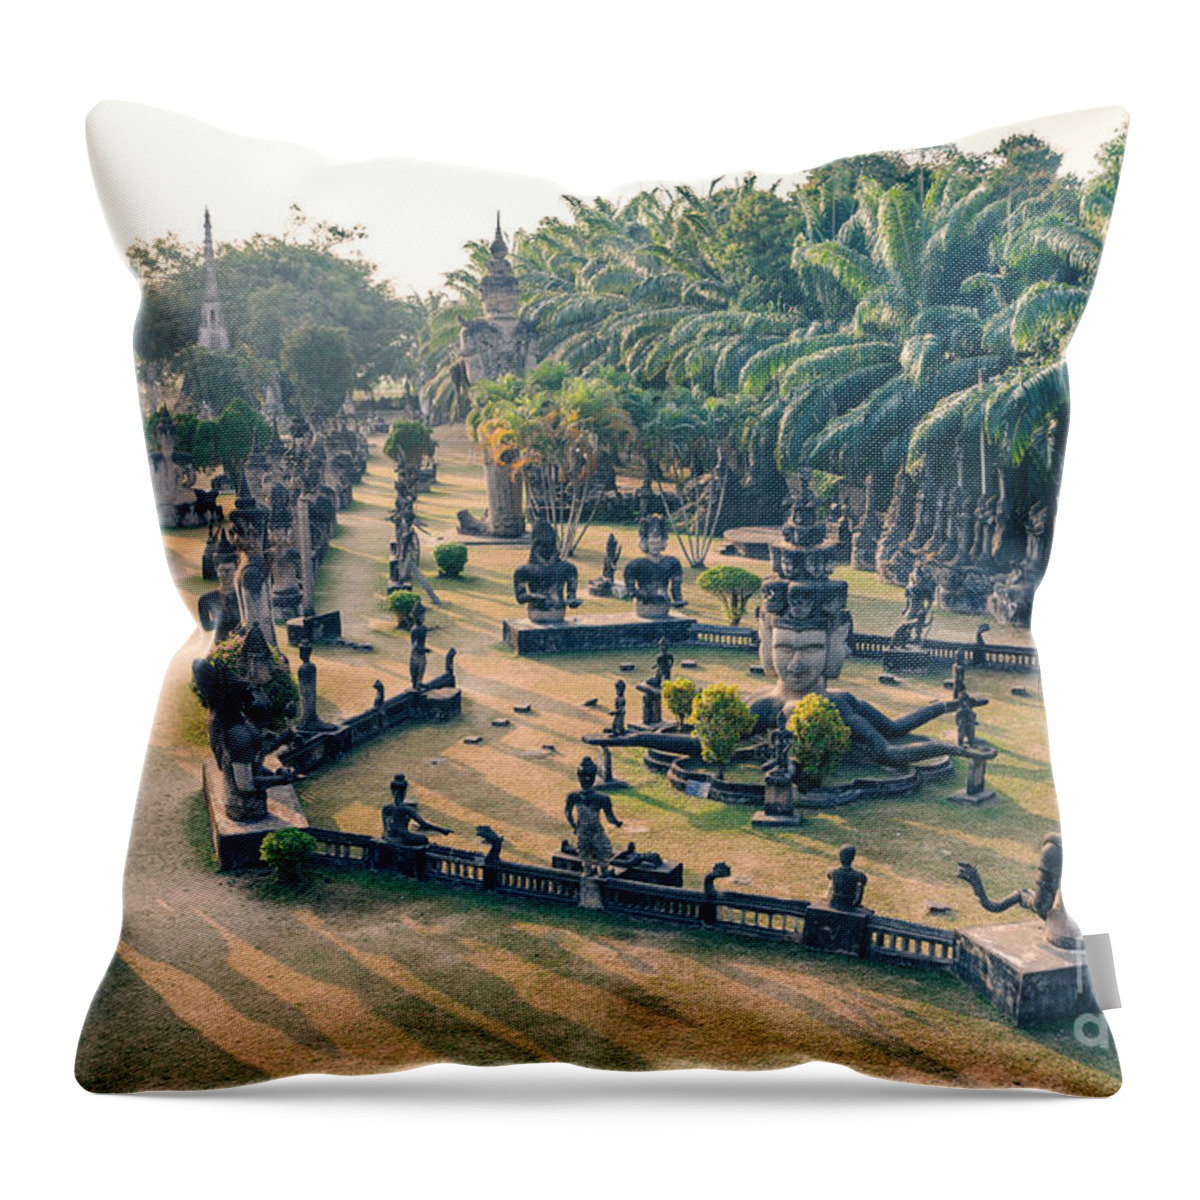 Buddha Park Throw Pillow featuring the photograph Buddha park near Vientiane - Laos by Matteo Colombo